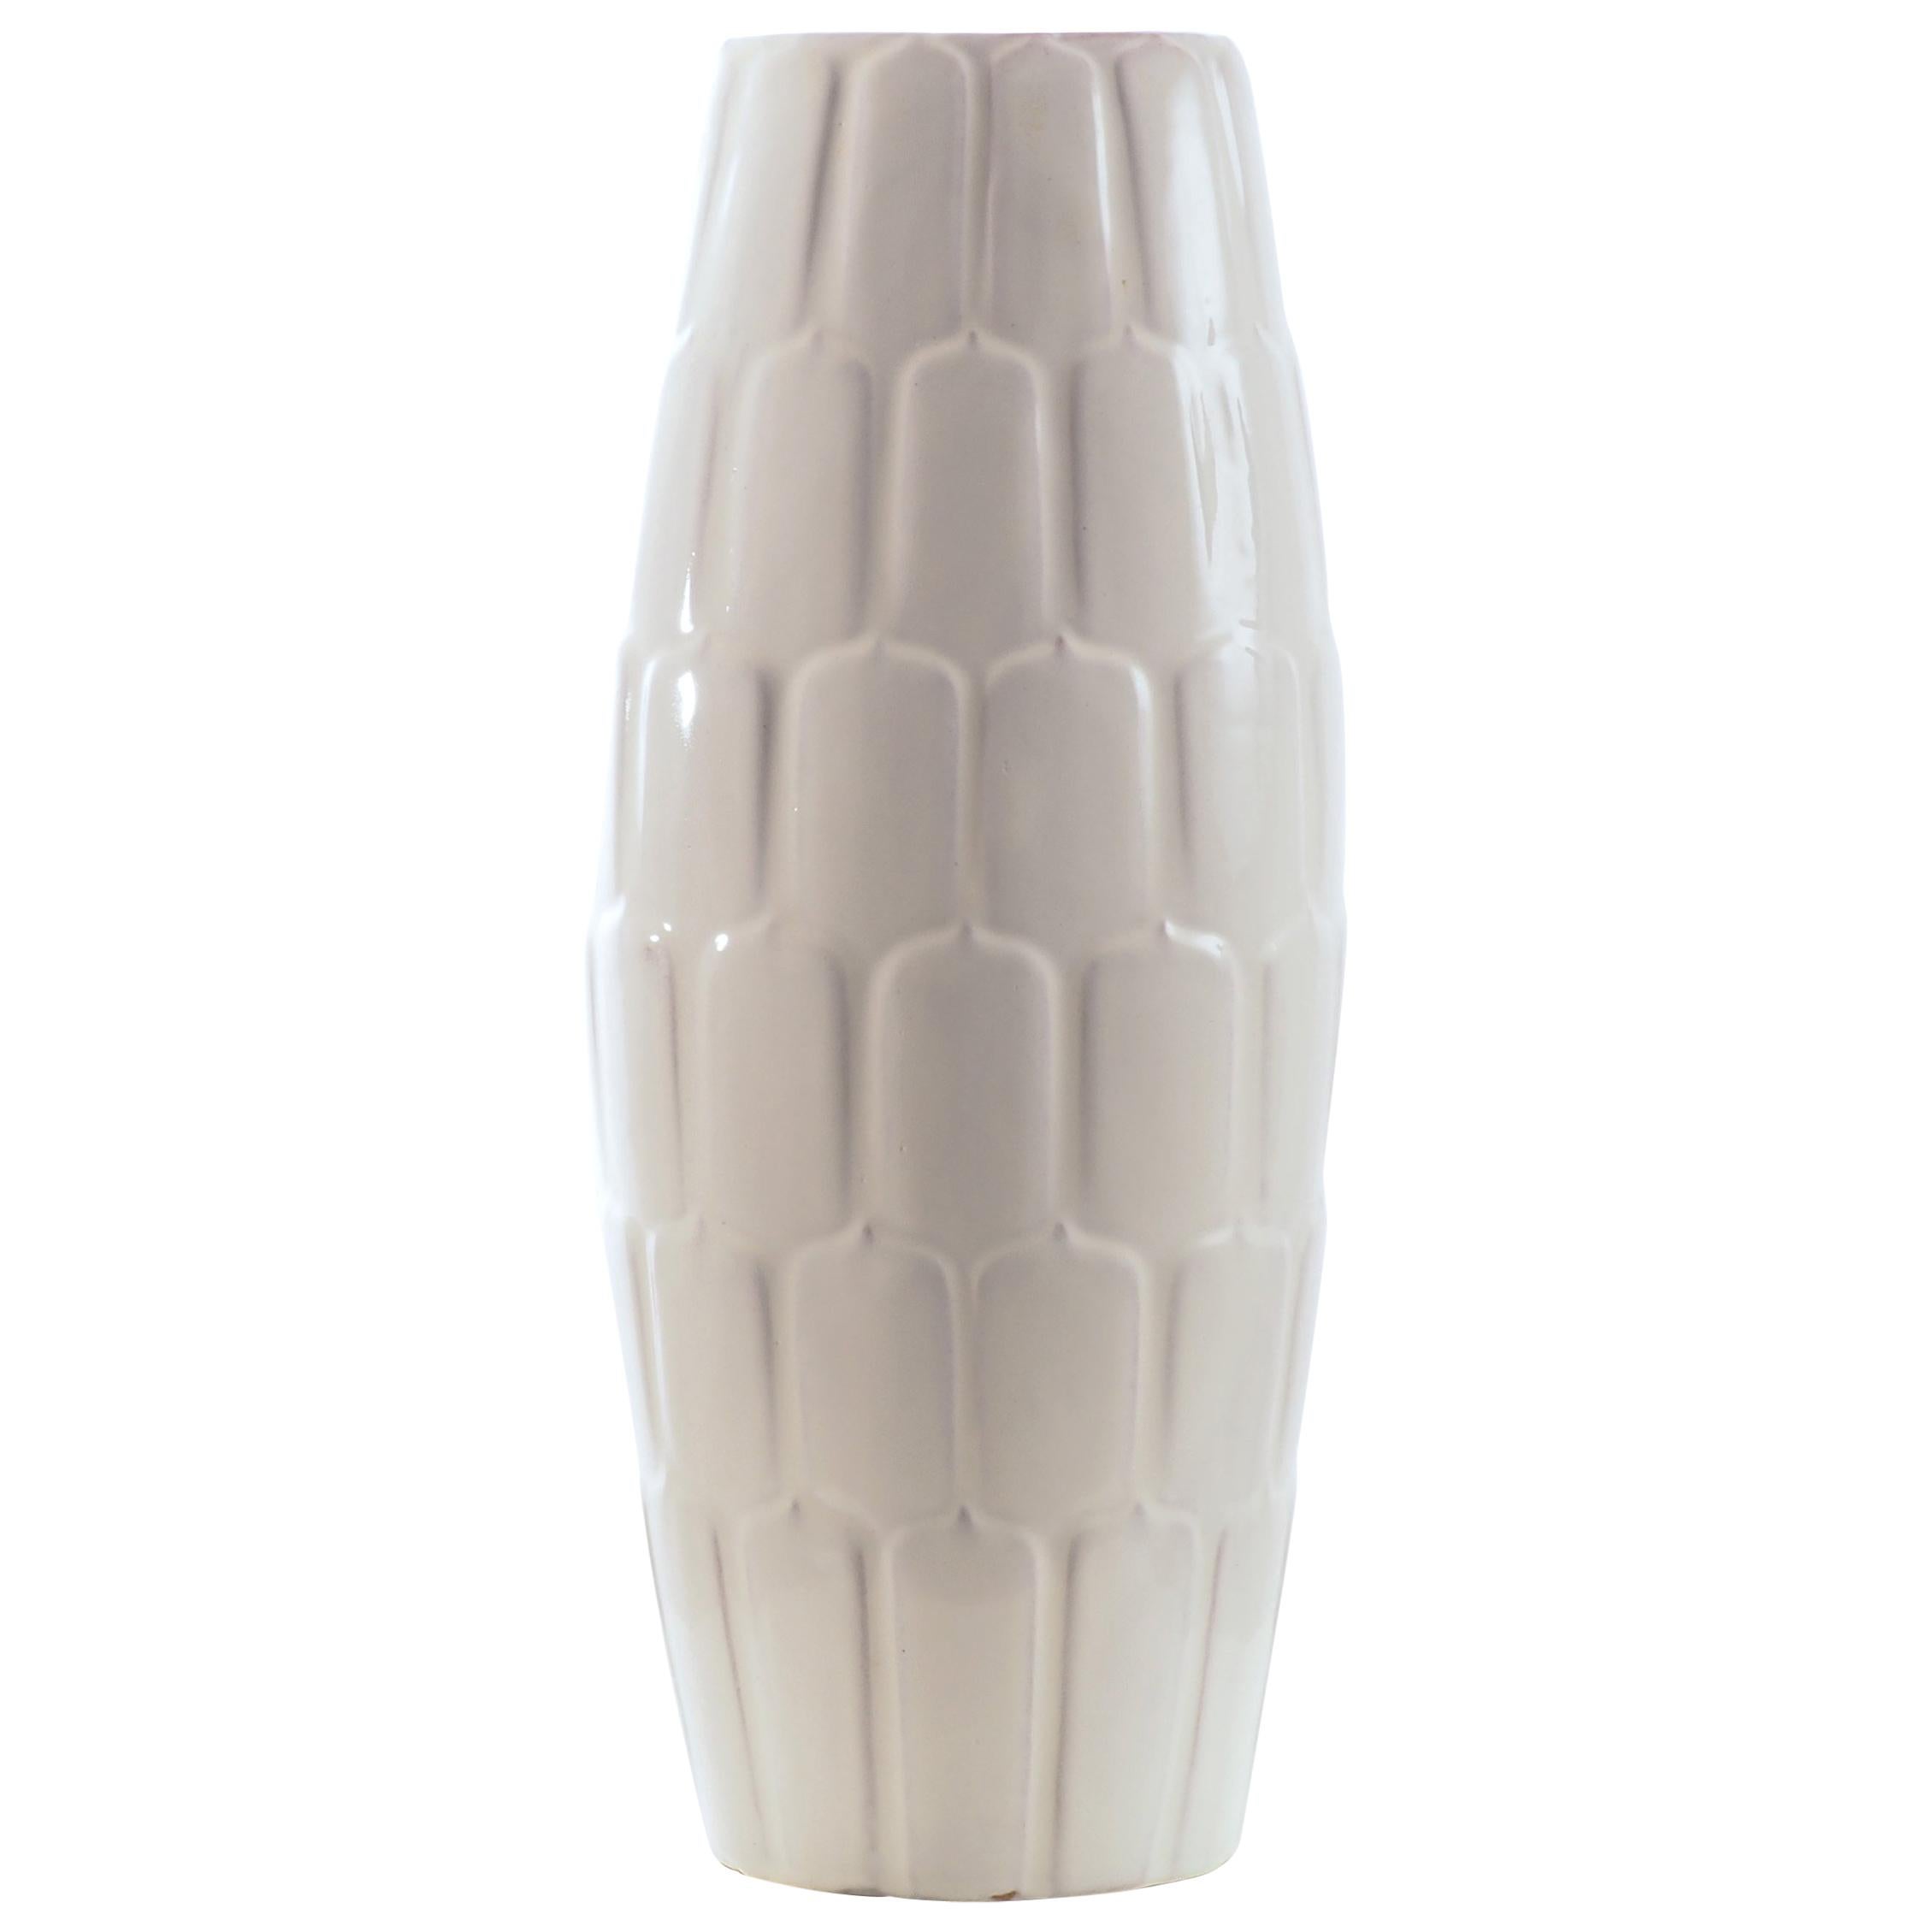 Vase by Anna-Lisa Thomson for Upsala-Ekeby